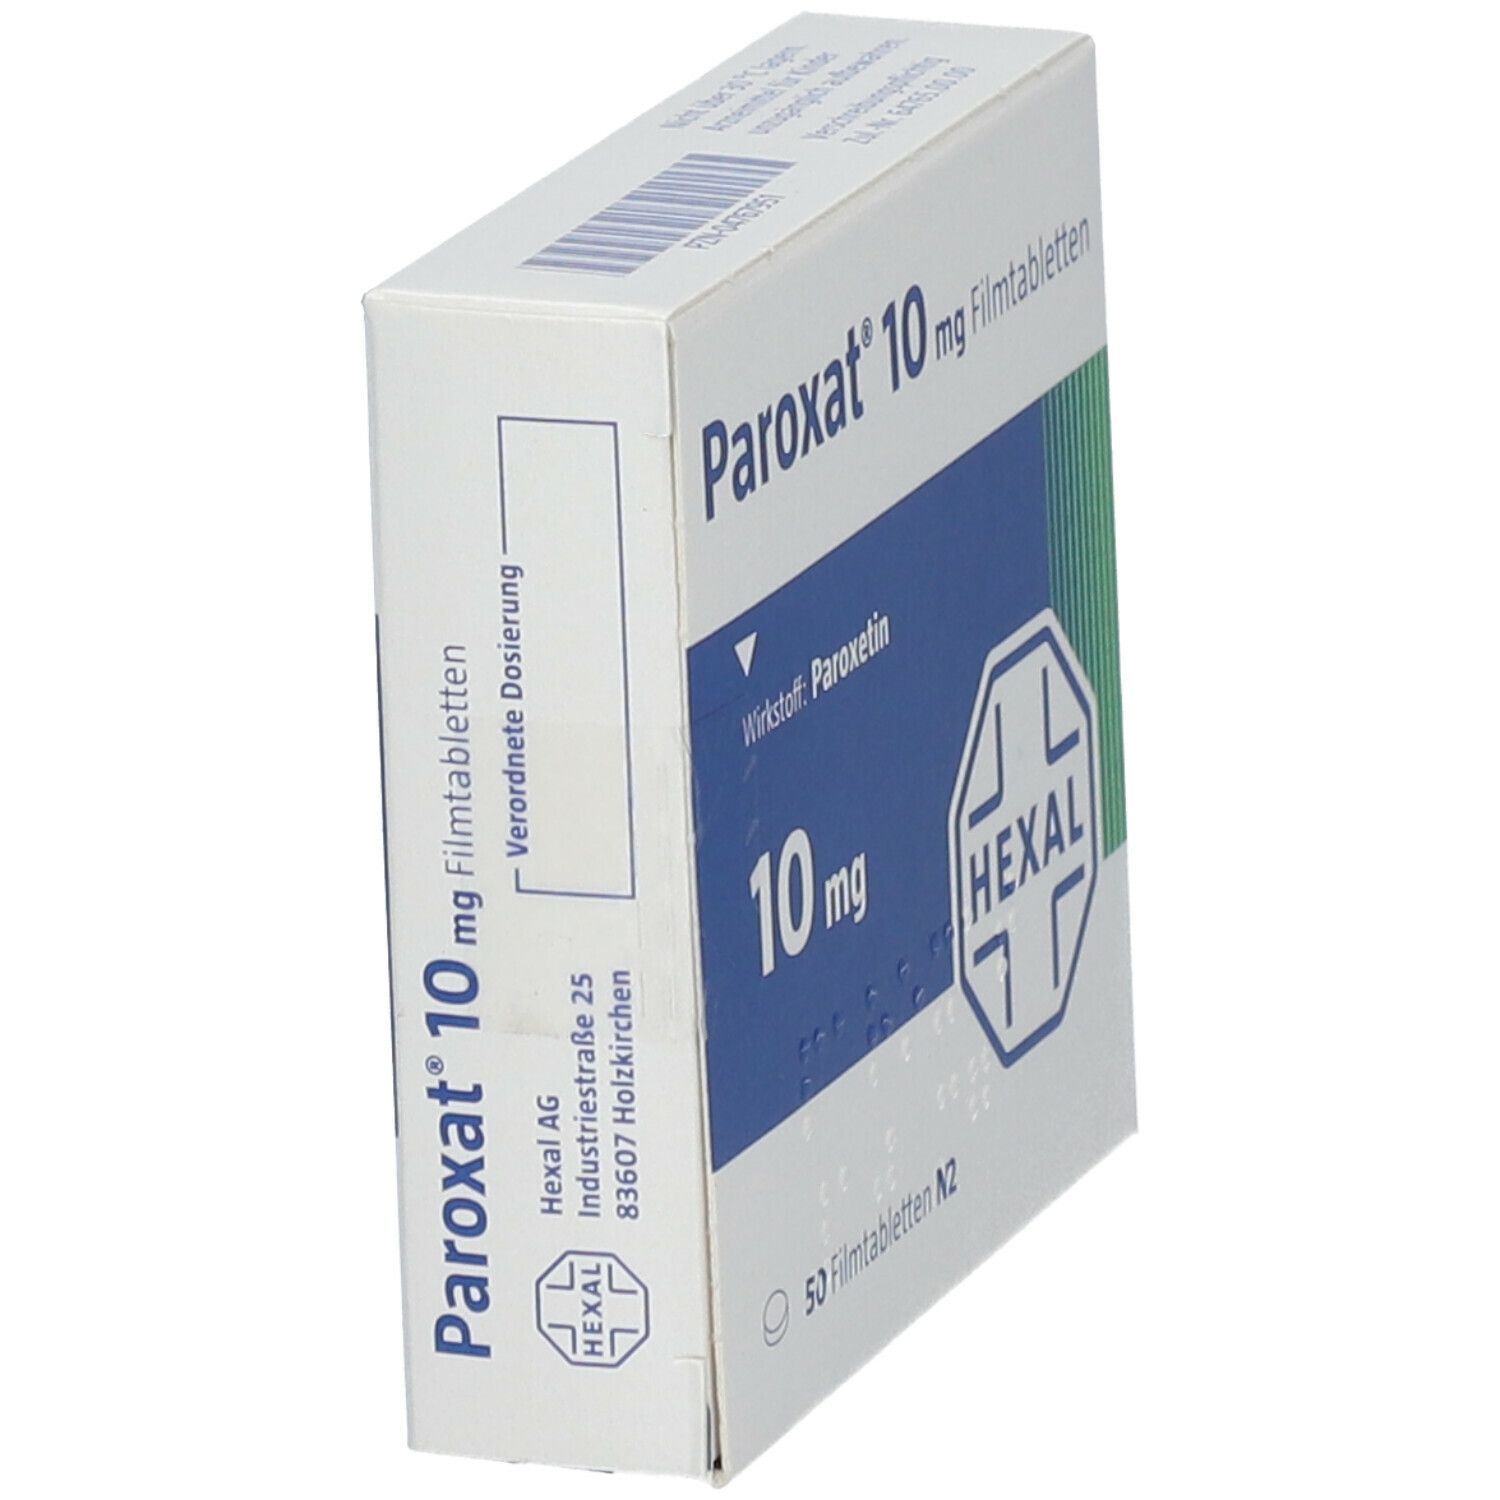 Paroxat® 10 mg